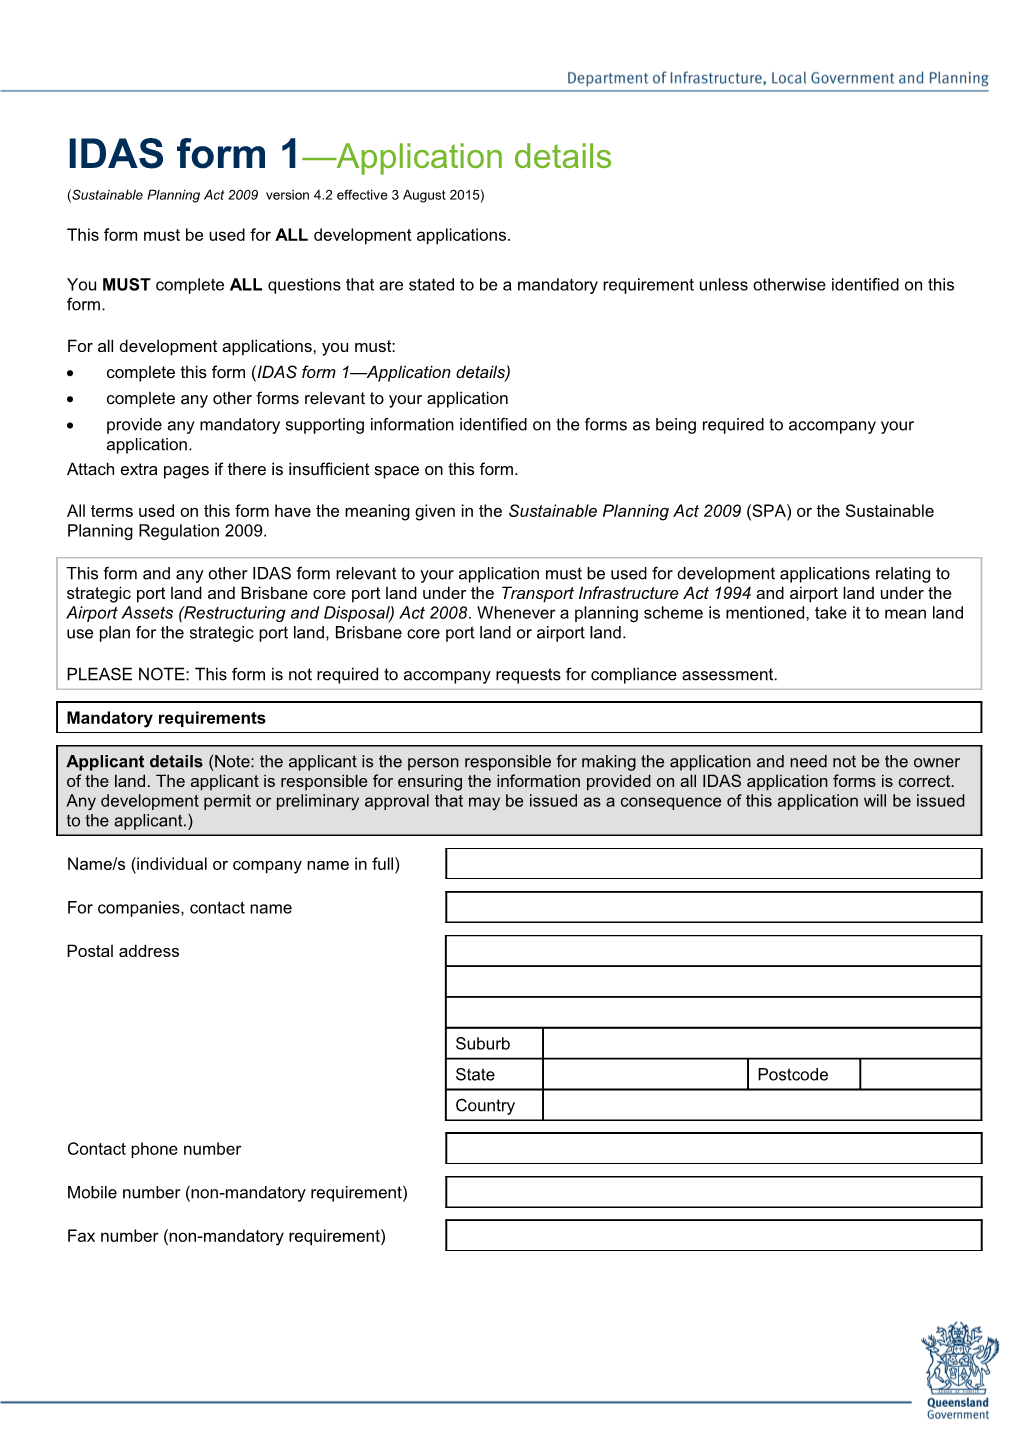 IDAS Form 1 - Application Details